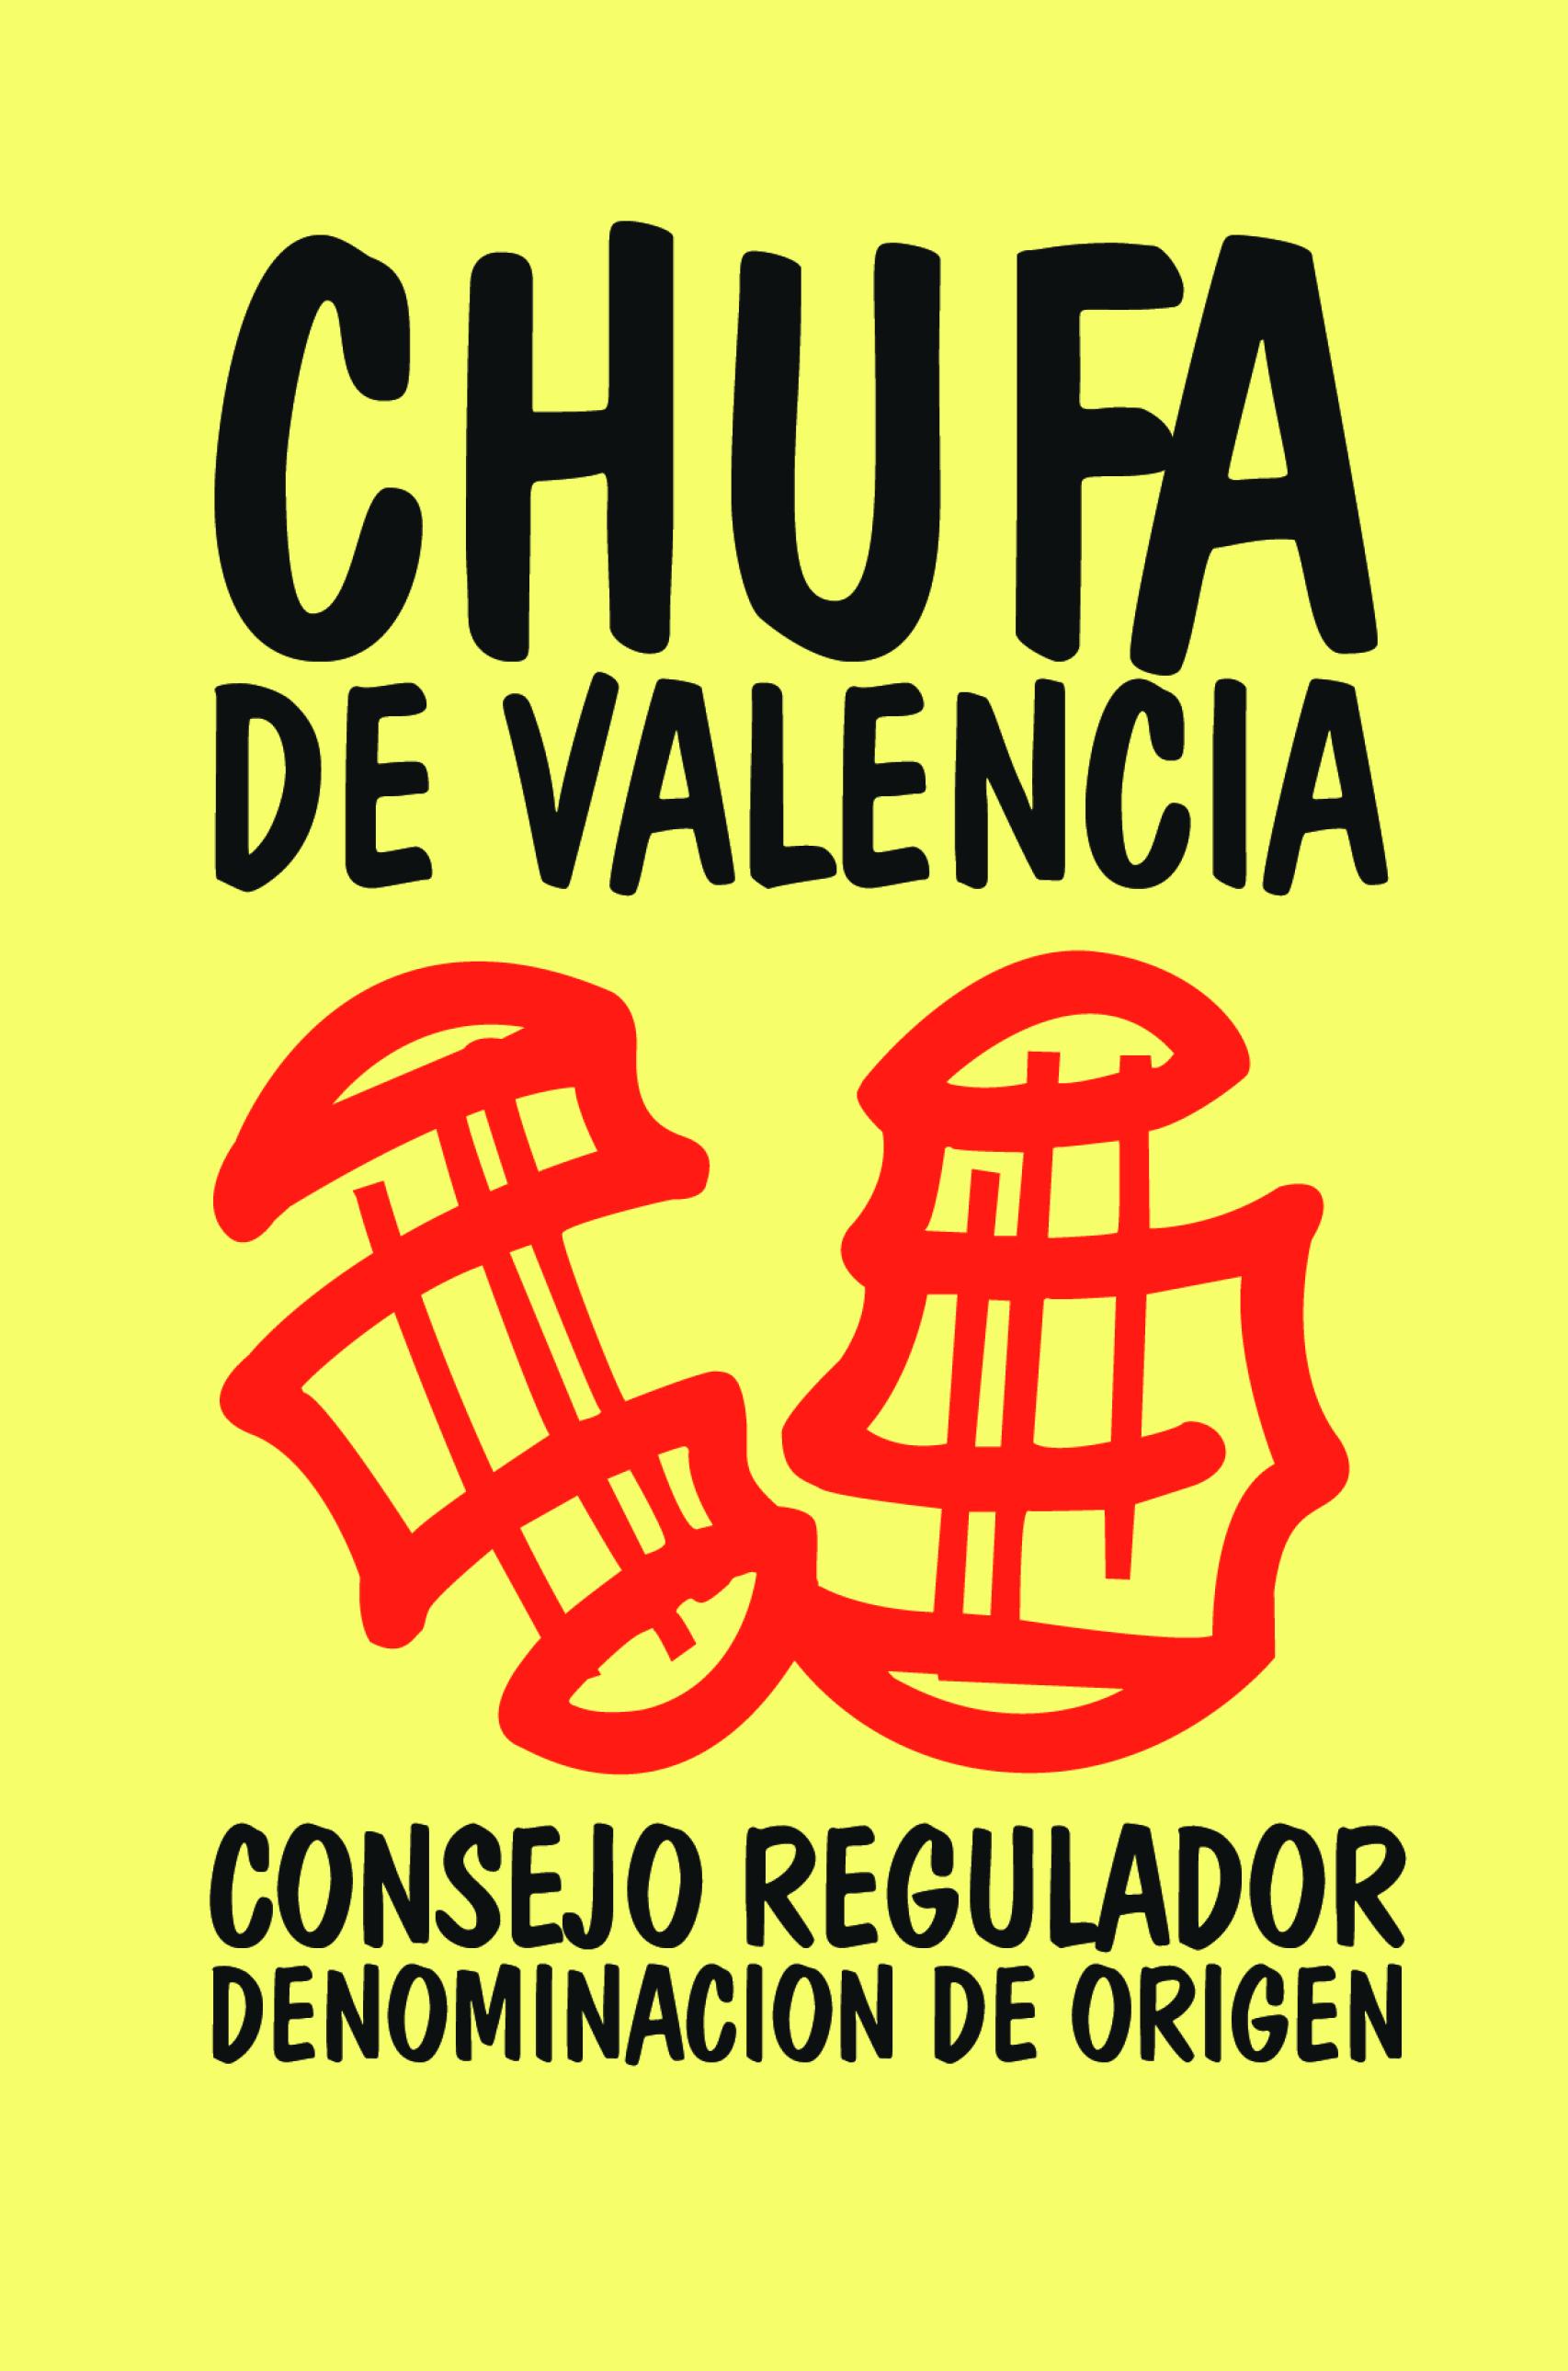 Sello Denominación de Origen Chufa de Valencia.